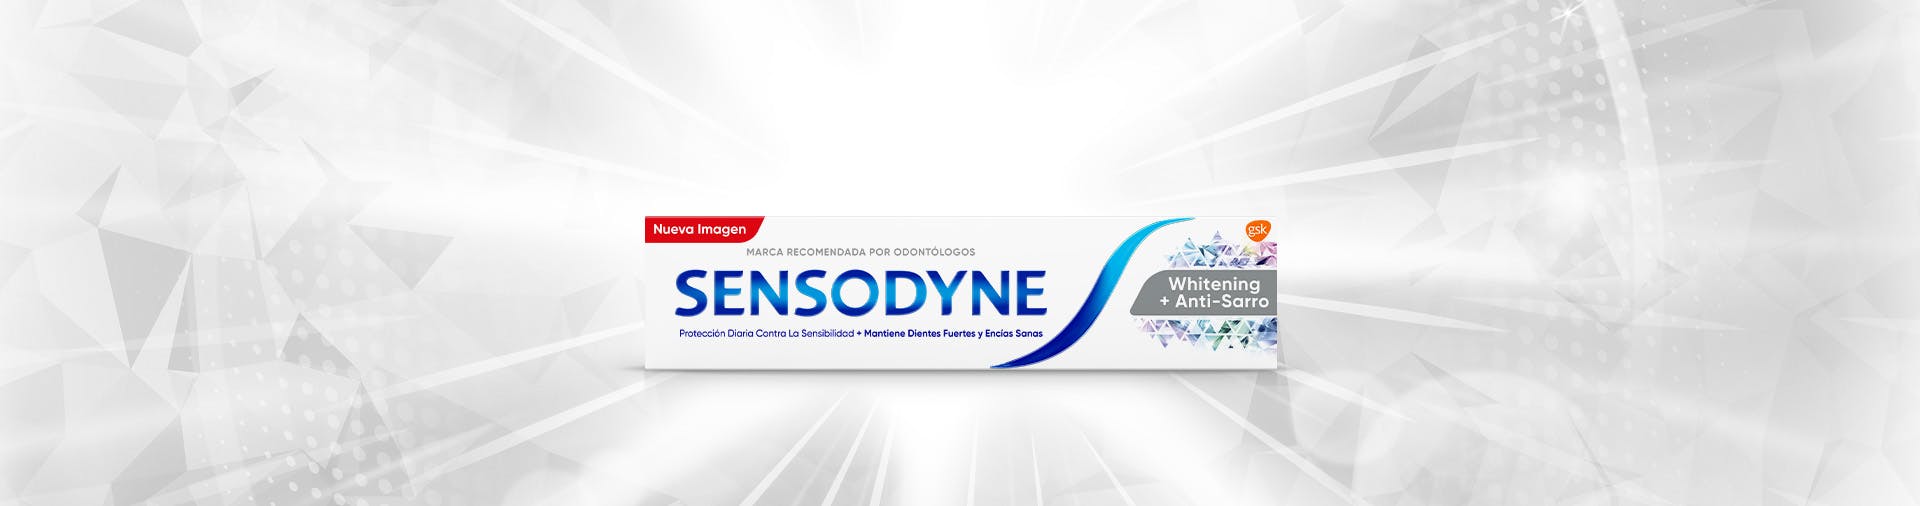 Sensodyne Whitening + Anti-sarro 